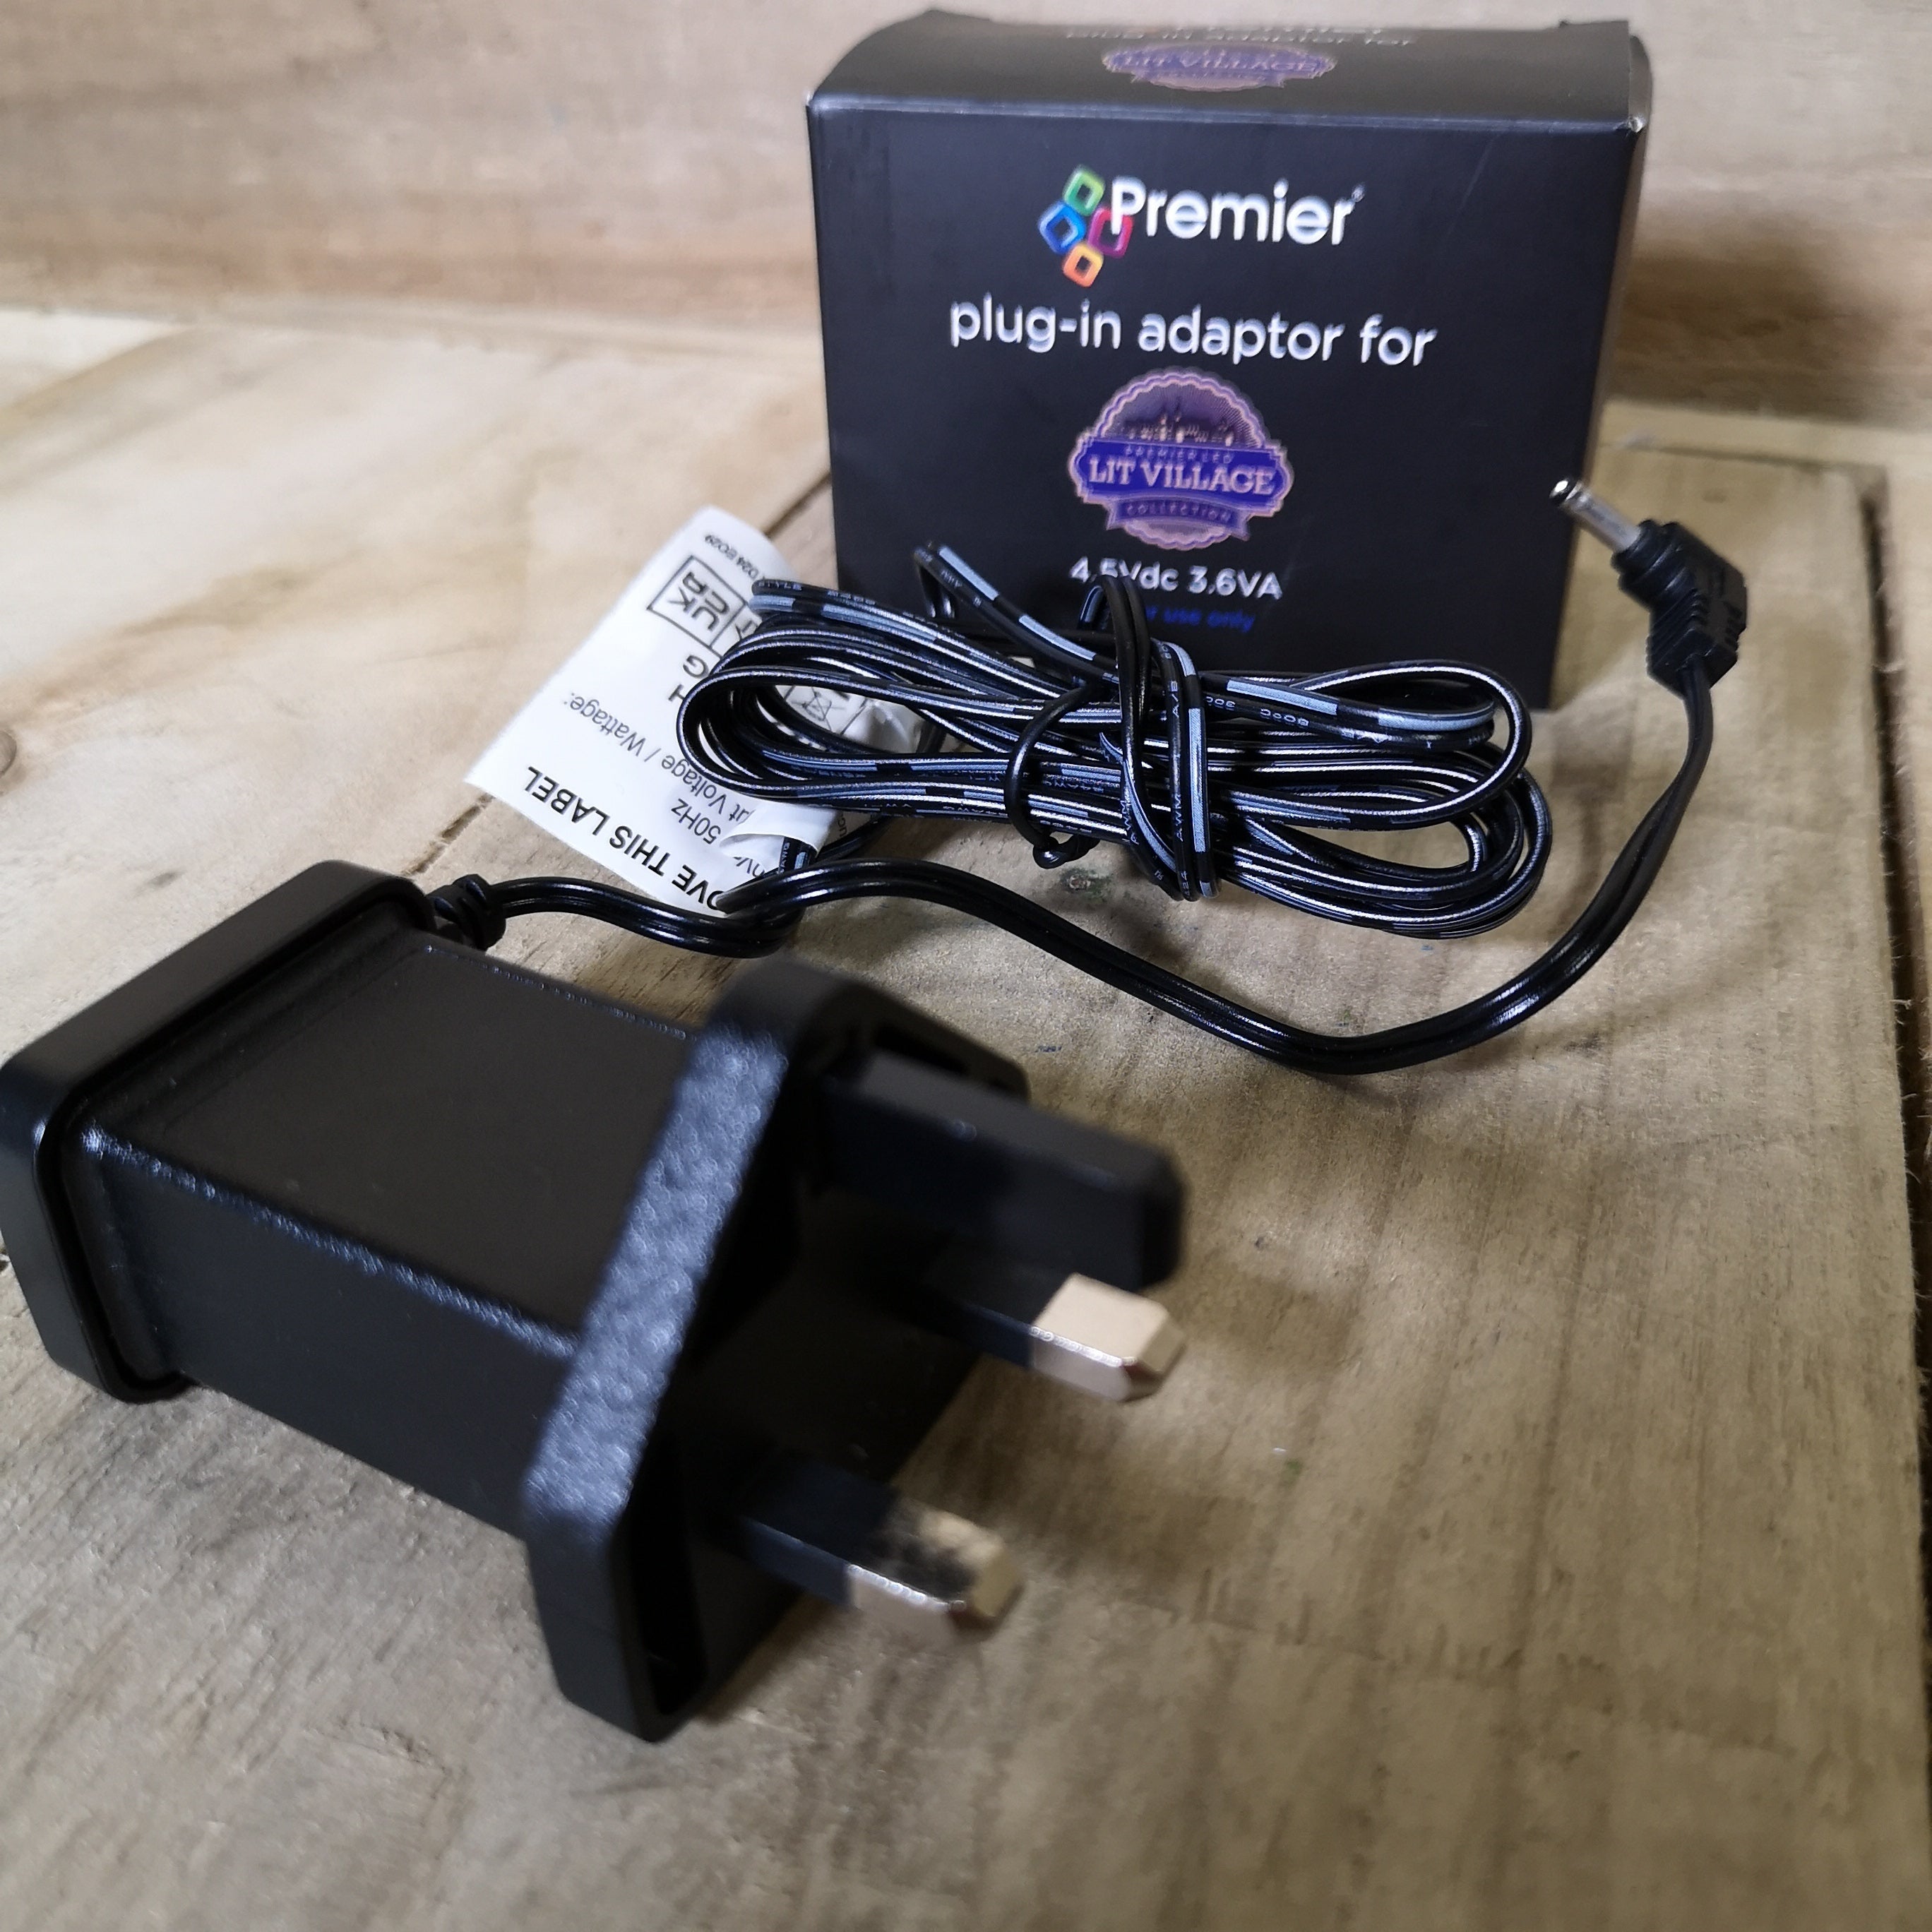 Premier TFD0515L 4.5Vdc 3.6VA Plug-in Adaptor for Christmas Decorations - L Shape